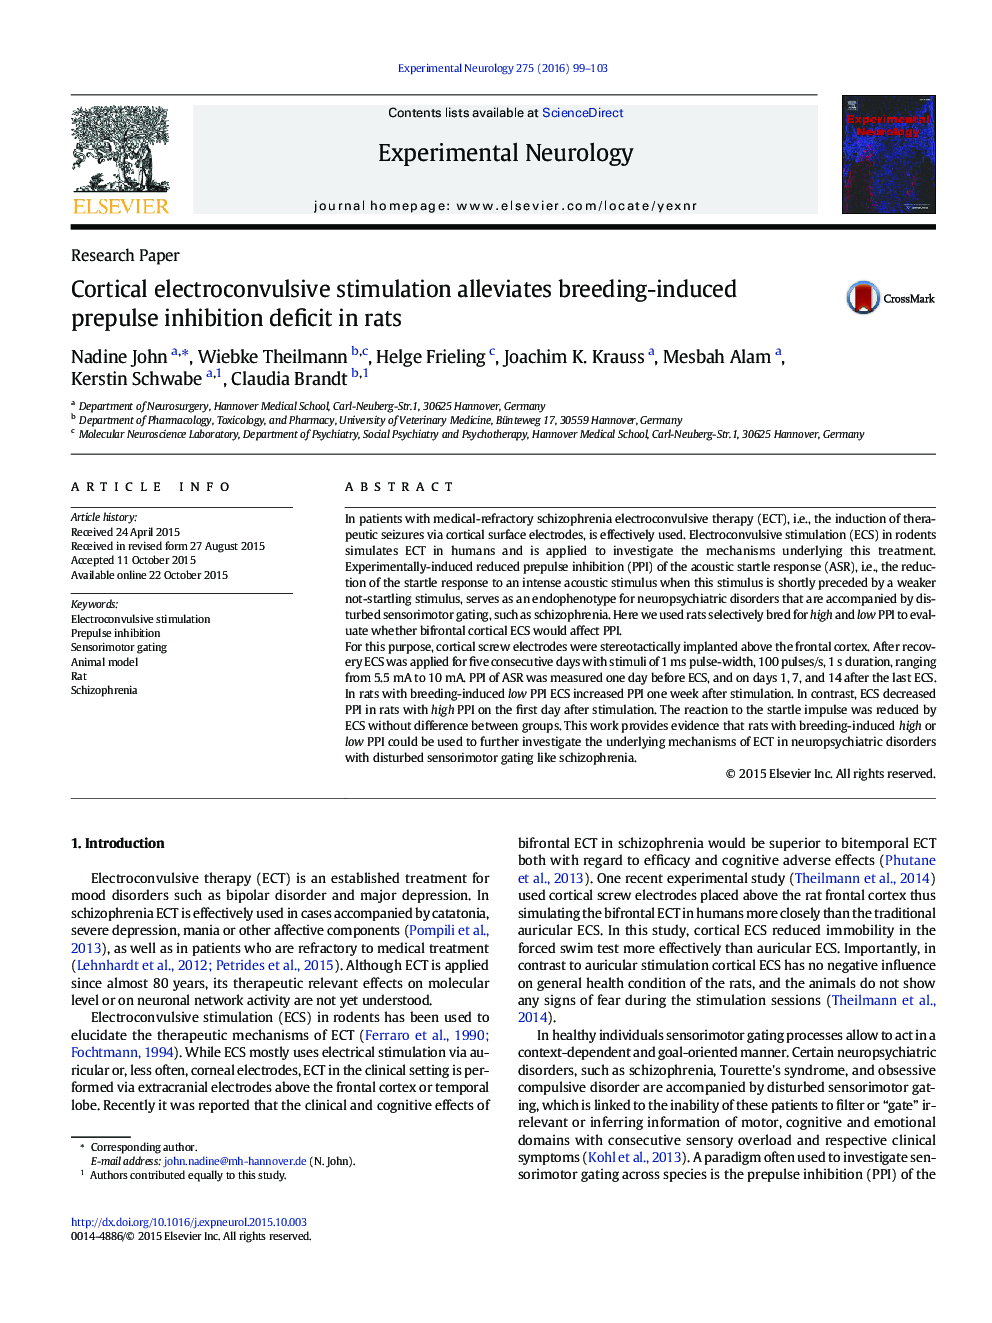 Cortical electroconvulsive stimulation alleviates breeding-induced prepulse inhibition deficit in rats